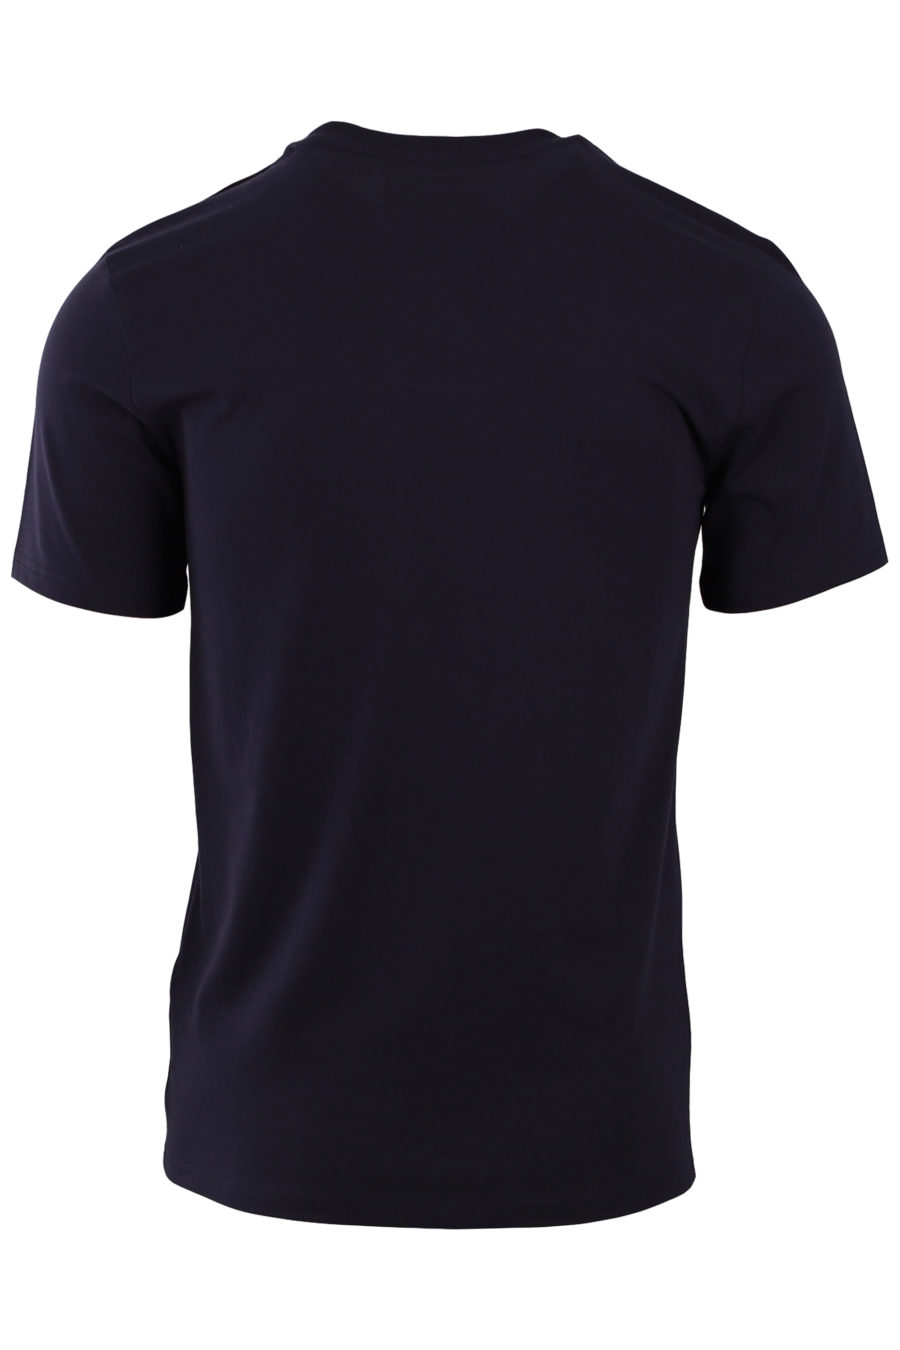 Camiseta color azul marino con logo blanco - 0ca0e4fc1a8904802ad66ebac040274b0ff3b65e